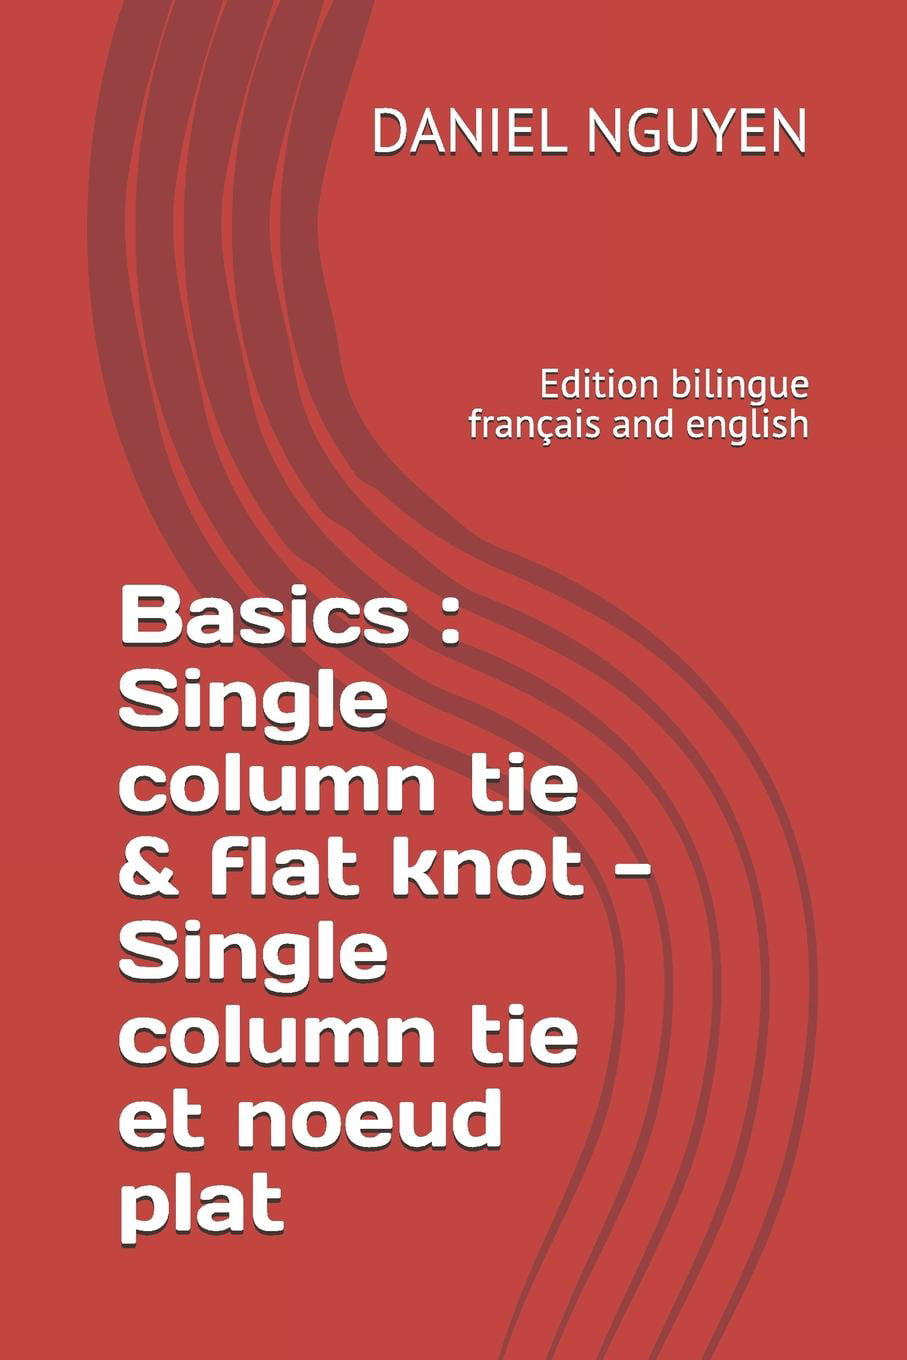 Column tie single Single column